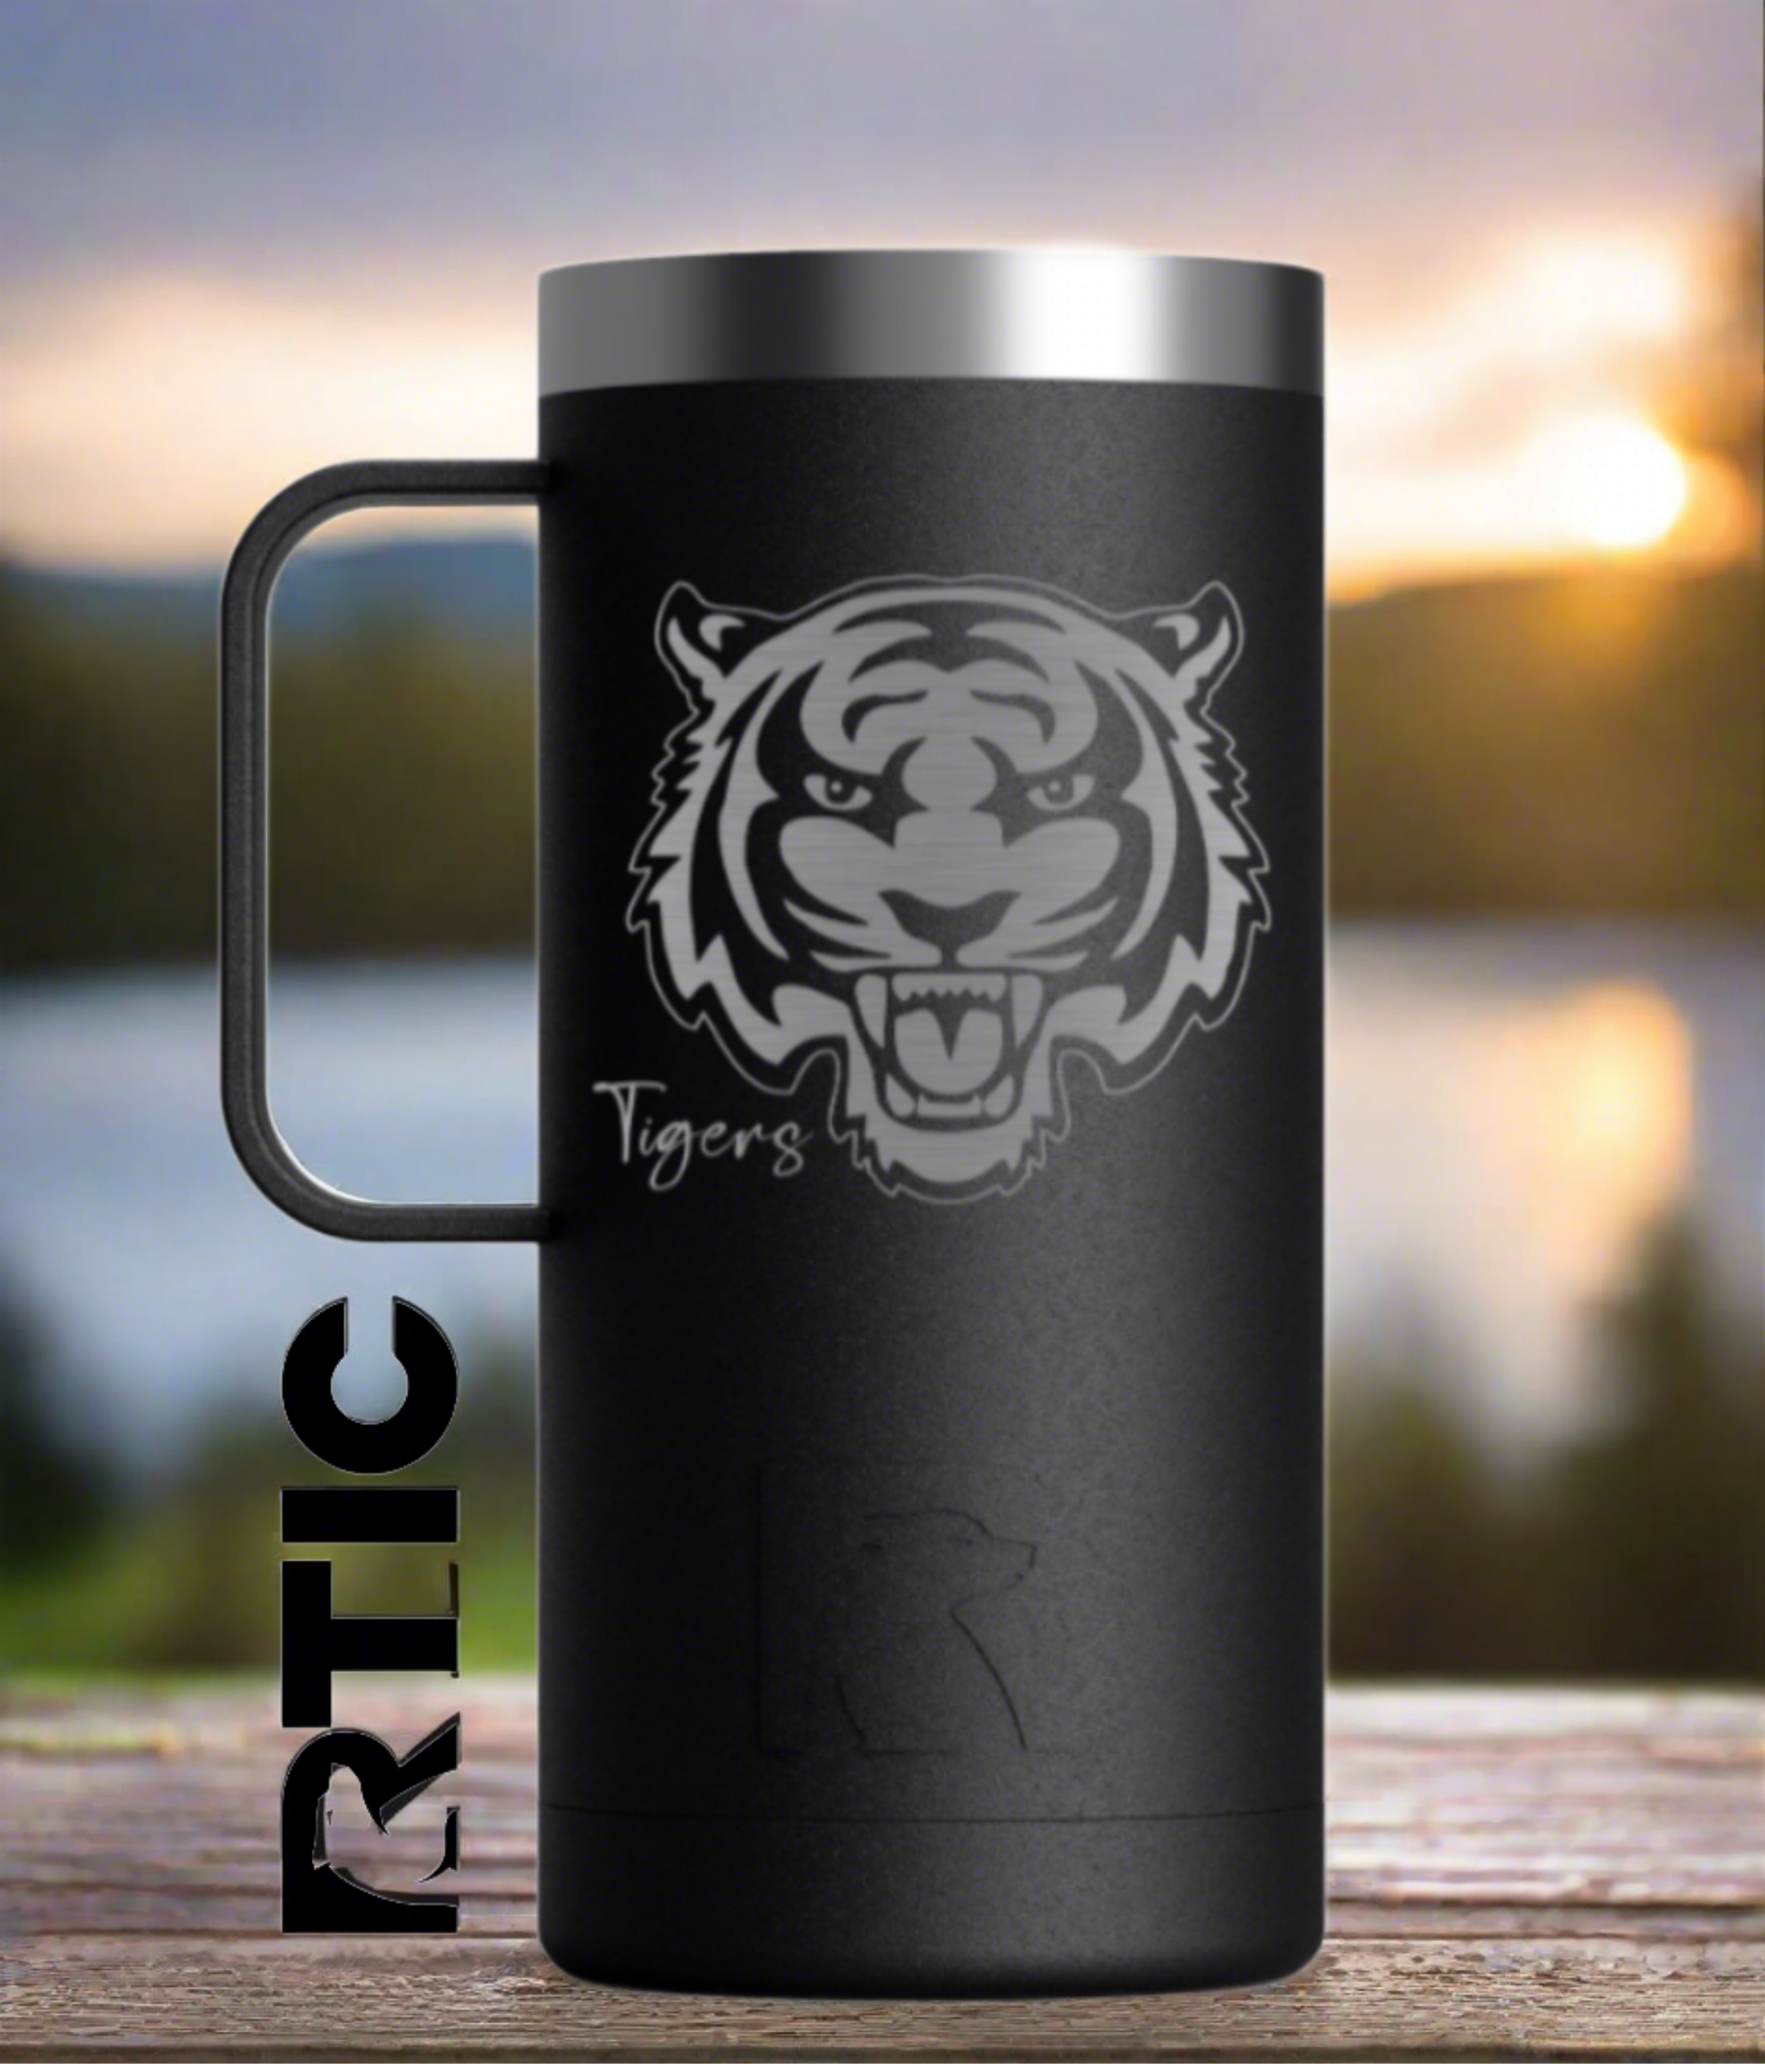 RTIC 16oz Cold/Hot Engraved Travel Mug